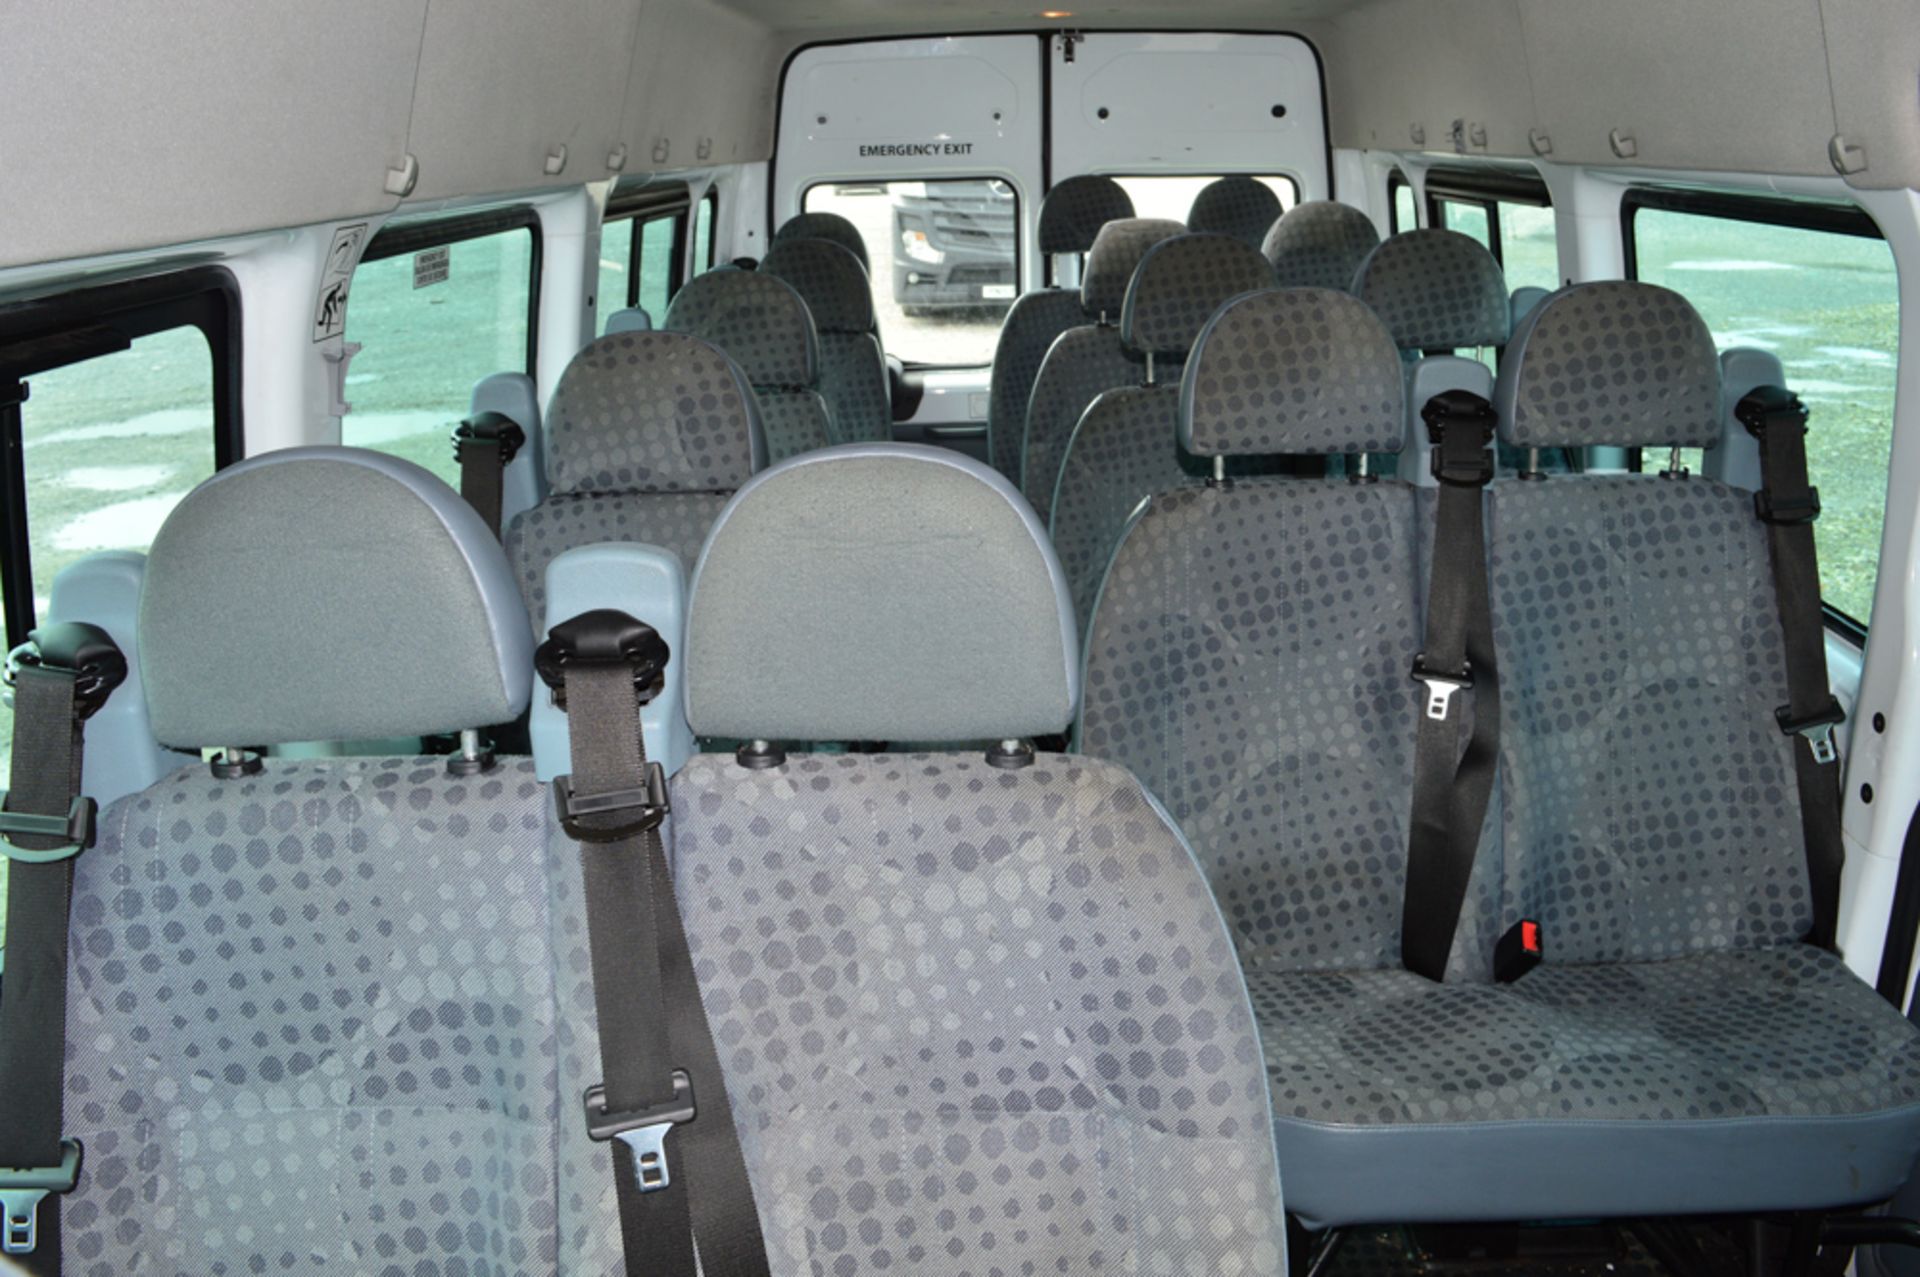 Ford Transit 135 T430 16 seat minibus Registration Number: YT12 UHK Date of Registration: 28/03/2012 - Image 8 of 11